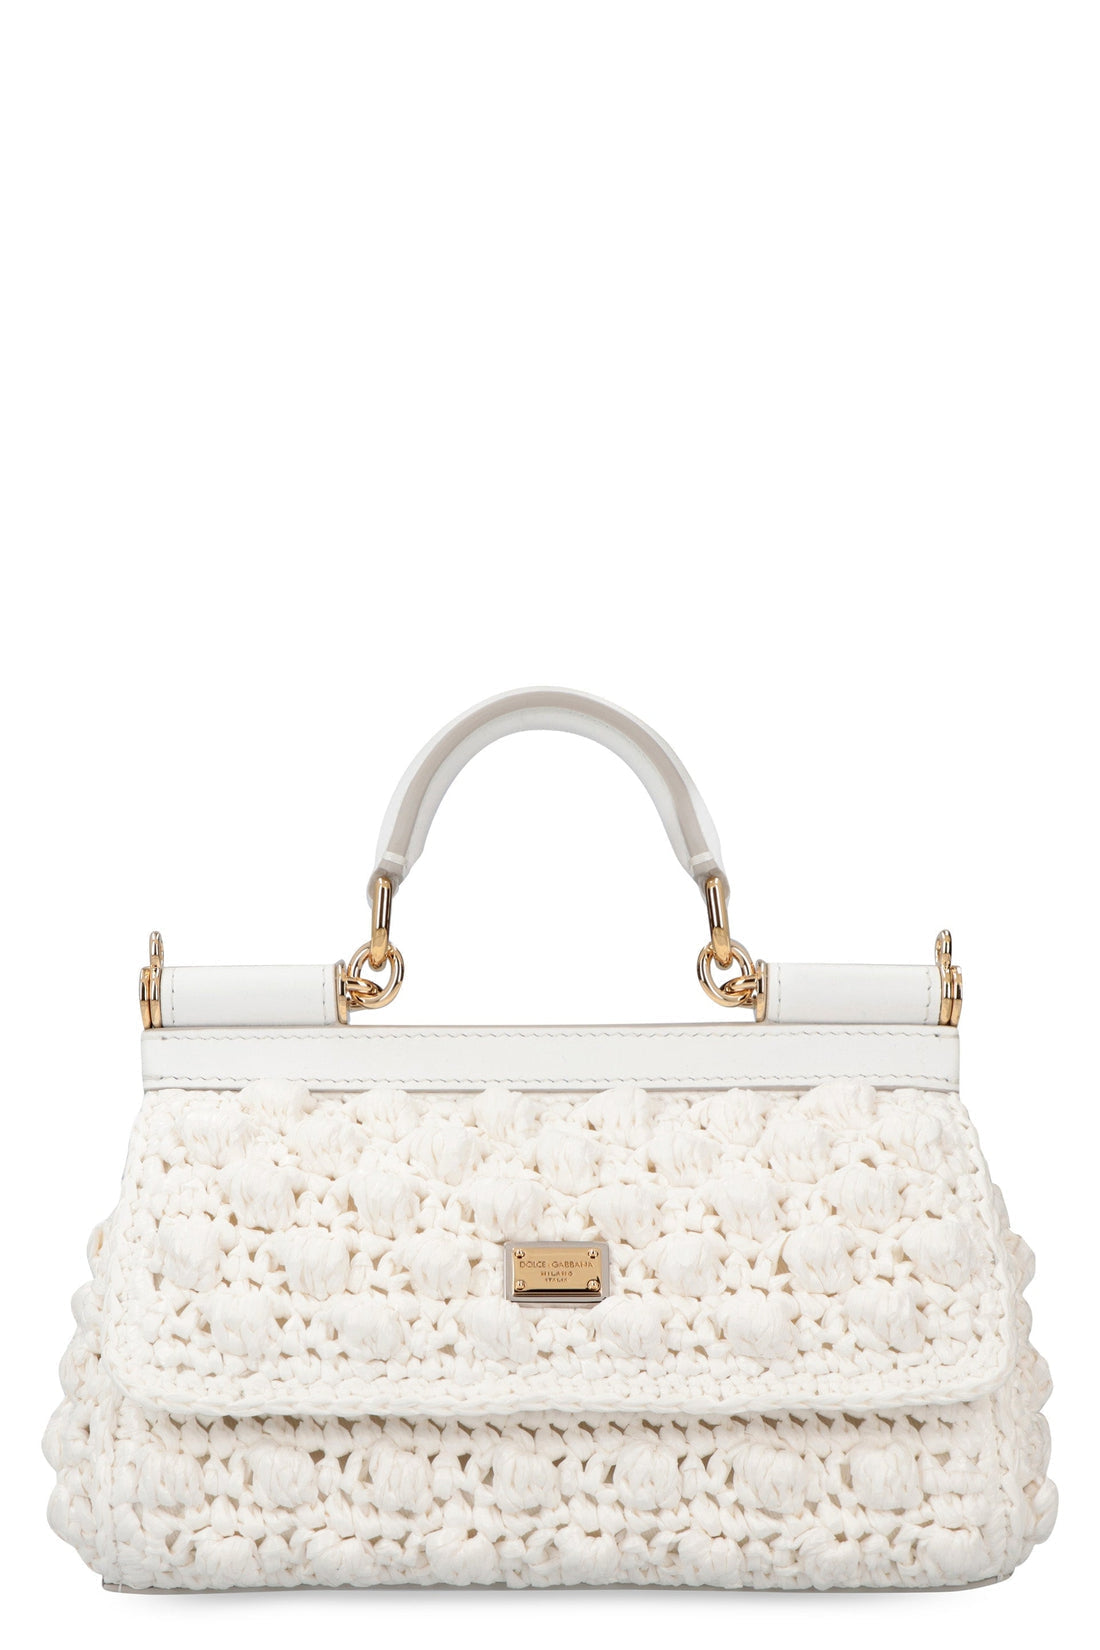 Dolce & Gabbana-OUTLET-SALE-Sicily mini handbag-ARCHIVIST